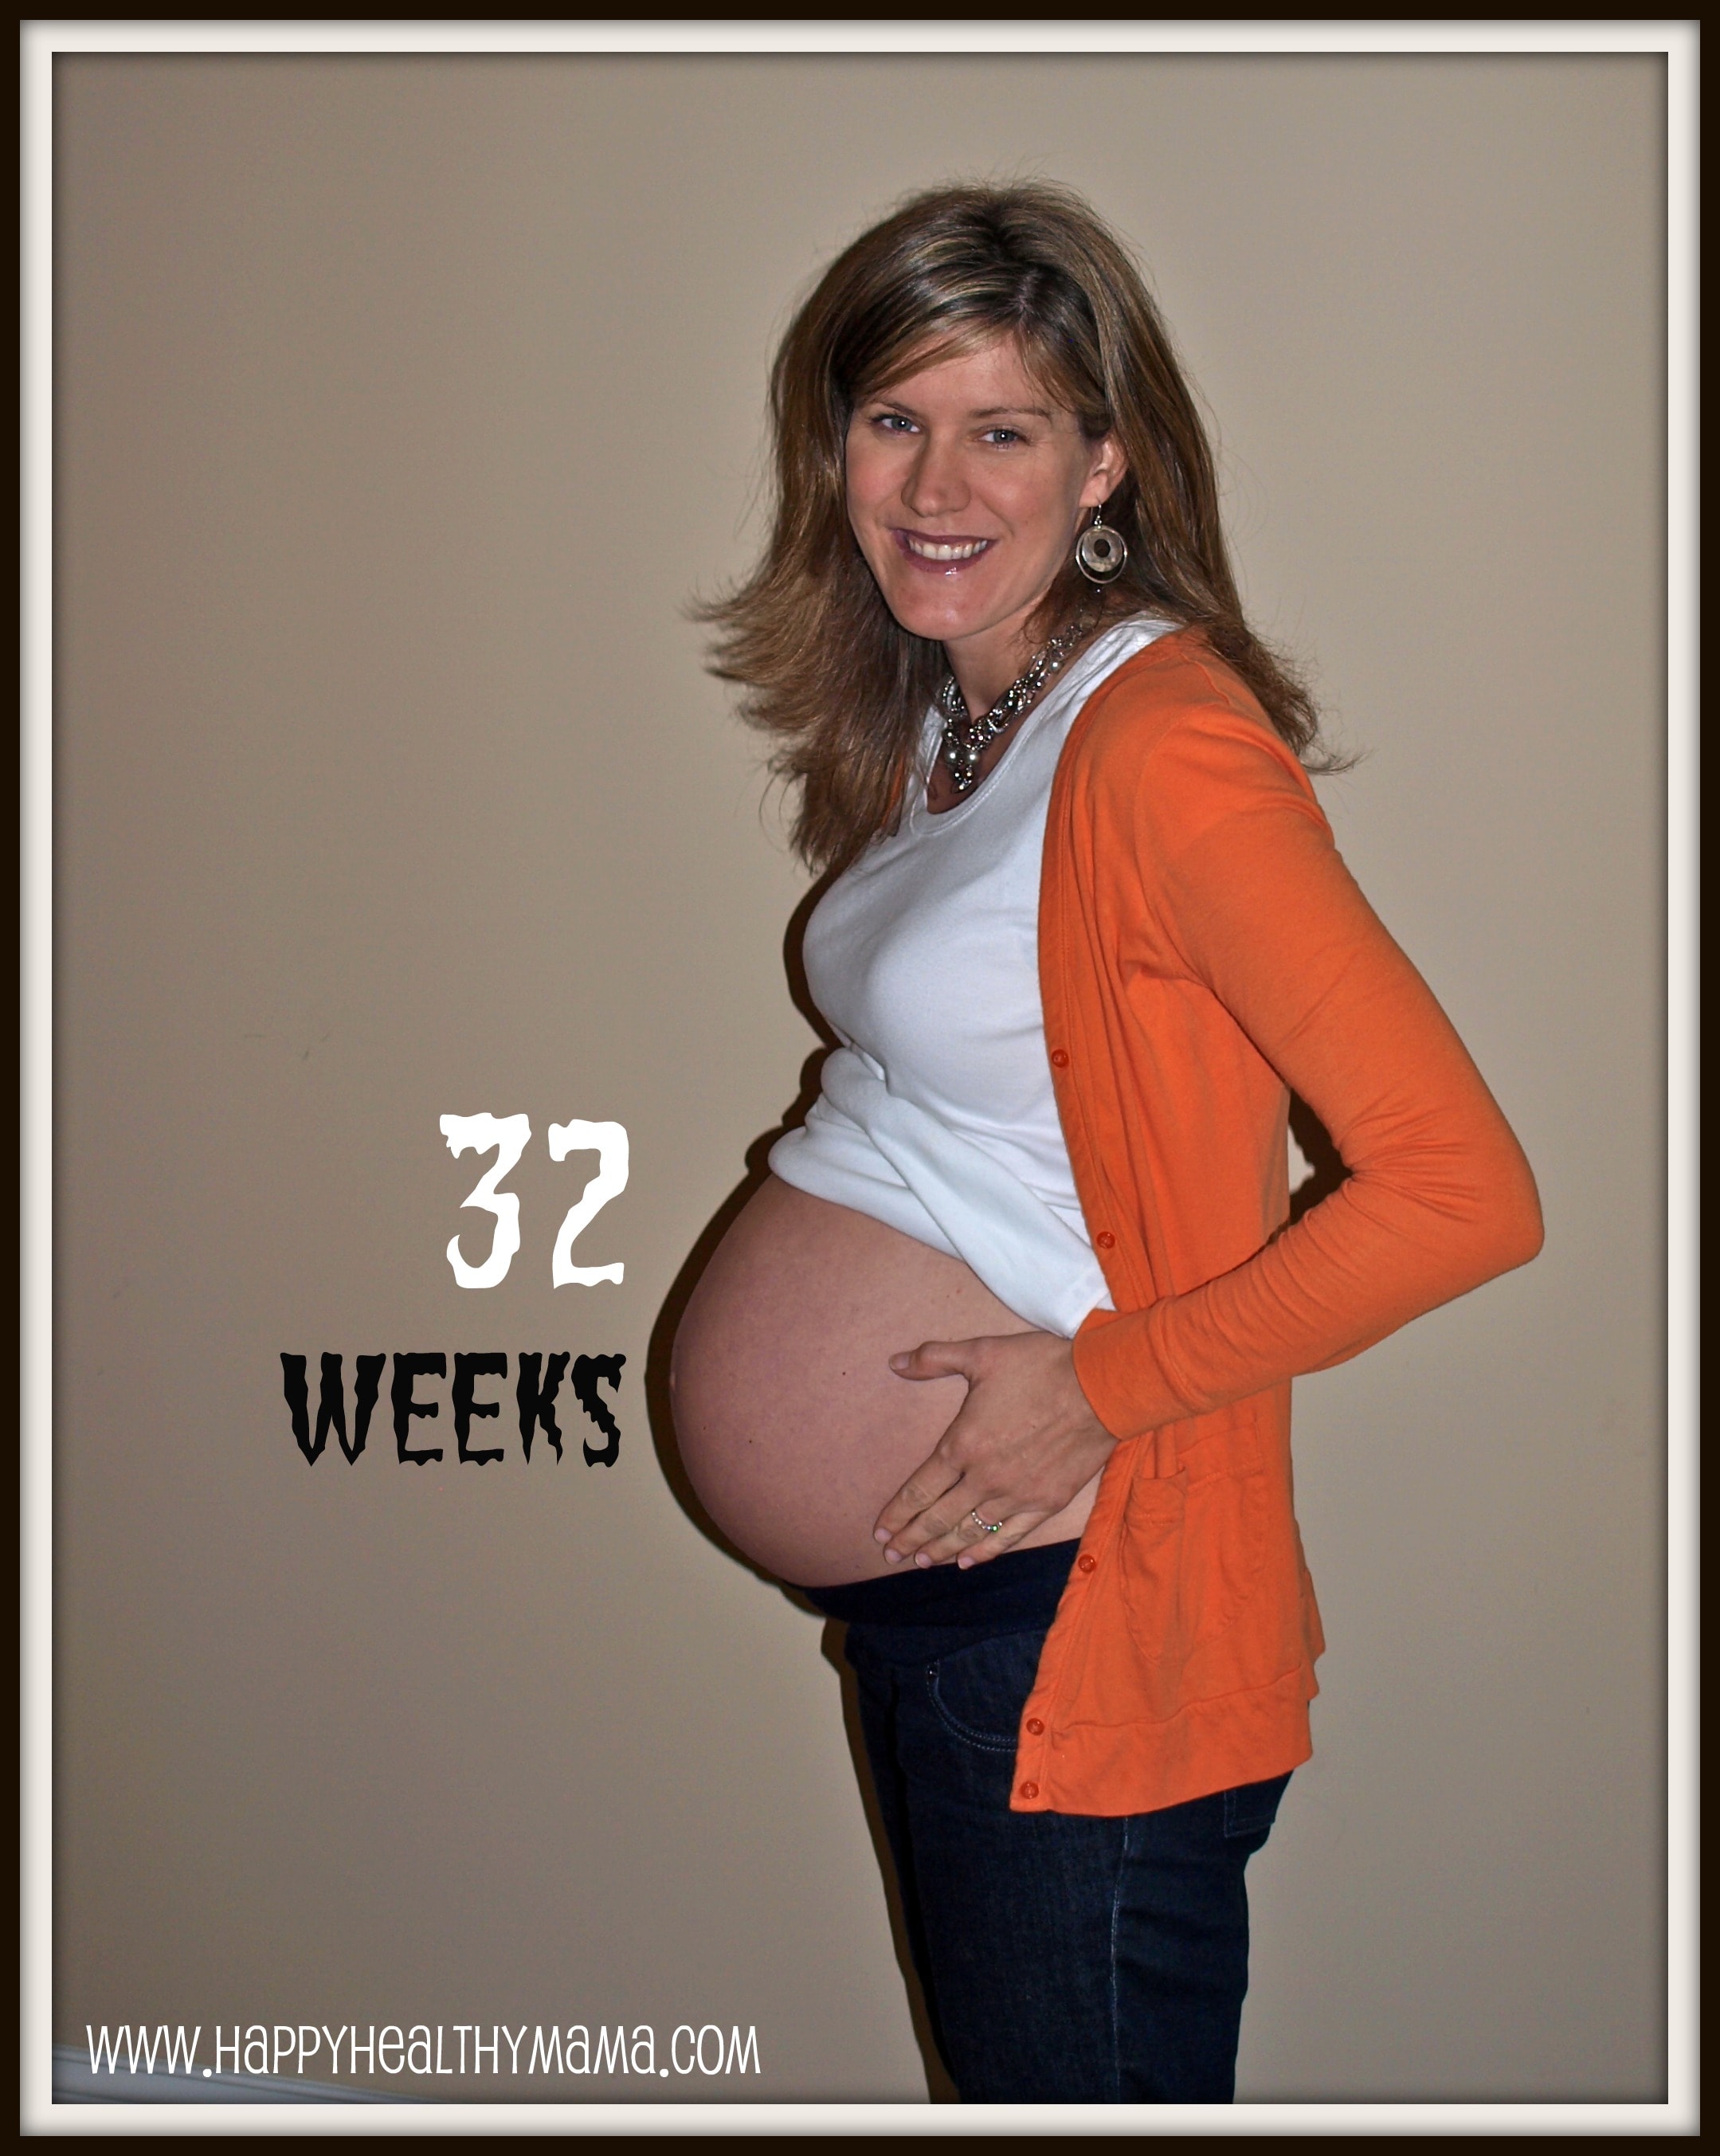 travel during 32 weeks of pregnancy